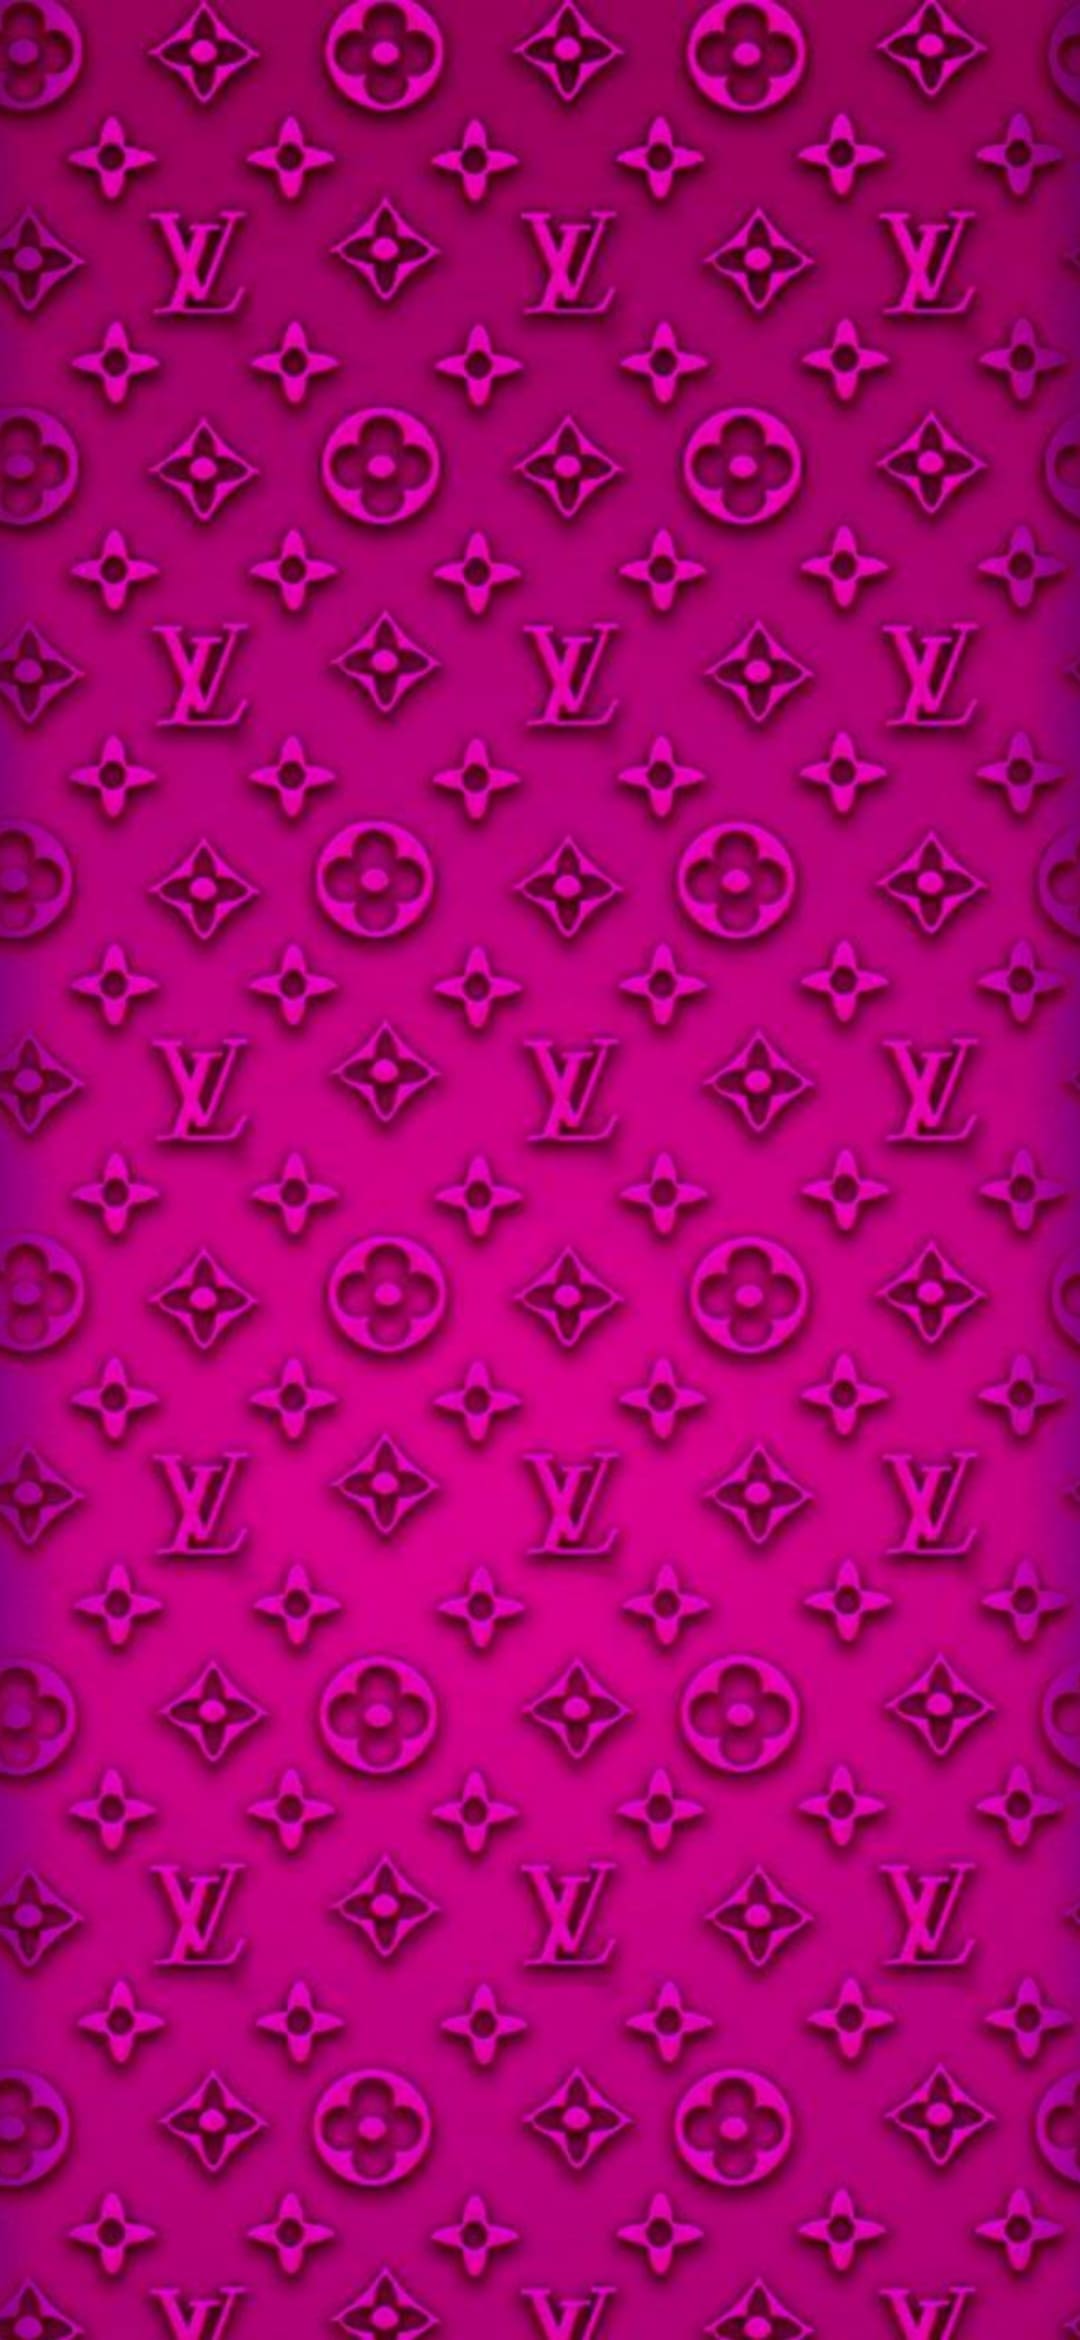 Aesthetic Louis Vuitton Wallpaper - KoLPaPer - Awesome Free HD Wallpapers